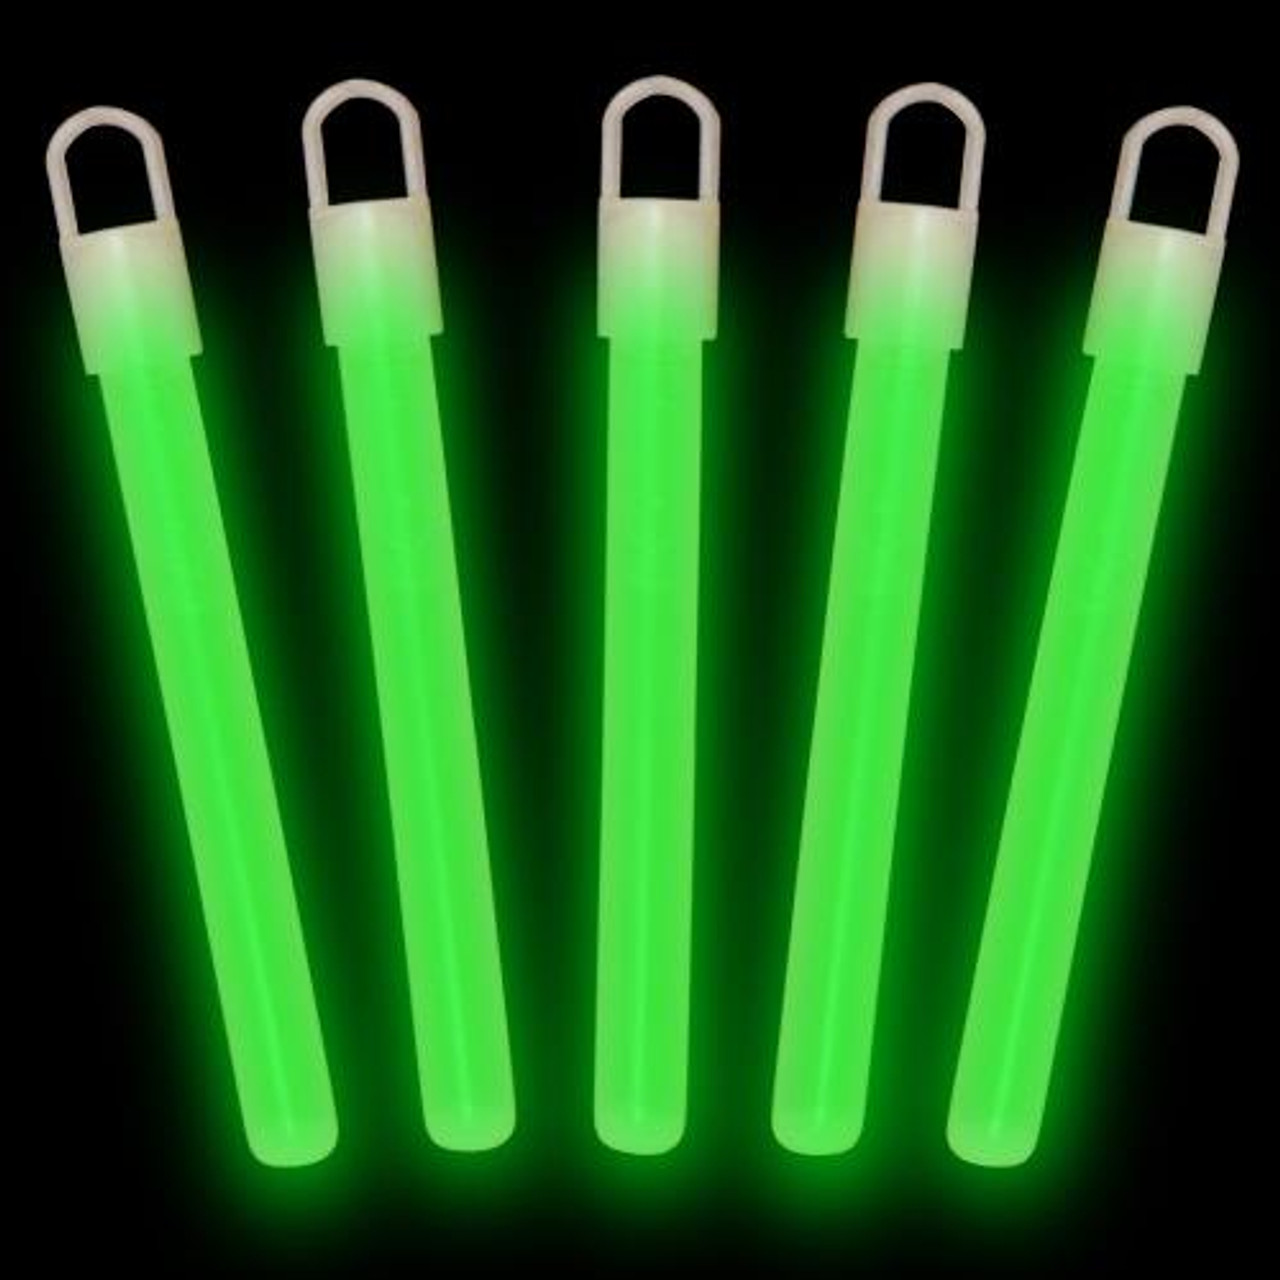  Glow Sticks Bulk Wholesale, 50 4” Green Glow Stick Light  Sticks. Bright Color, Kids Love Them! Glow 8-12 Hrs, 2-Year Shelf Life,  Sturdy Packaging, GlowWithUs Brand : Sports & Outdoors